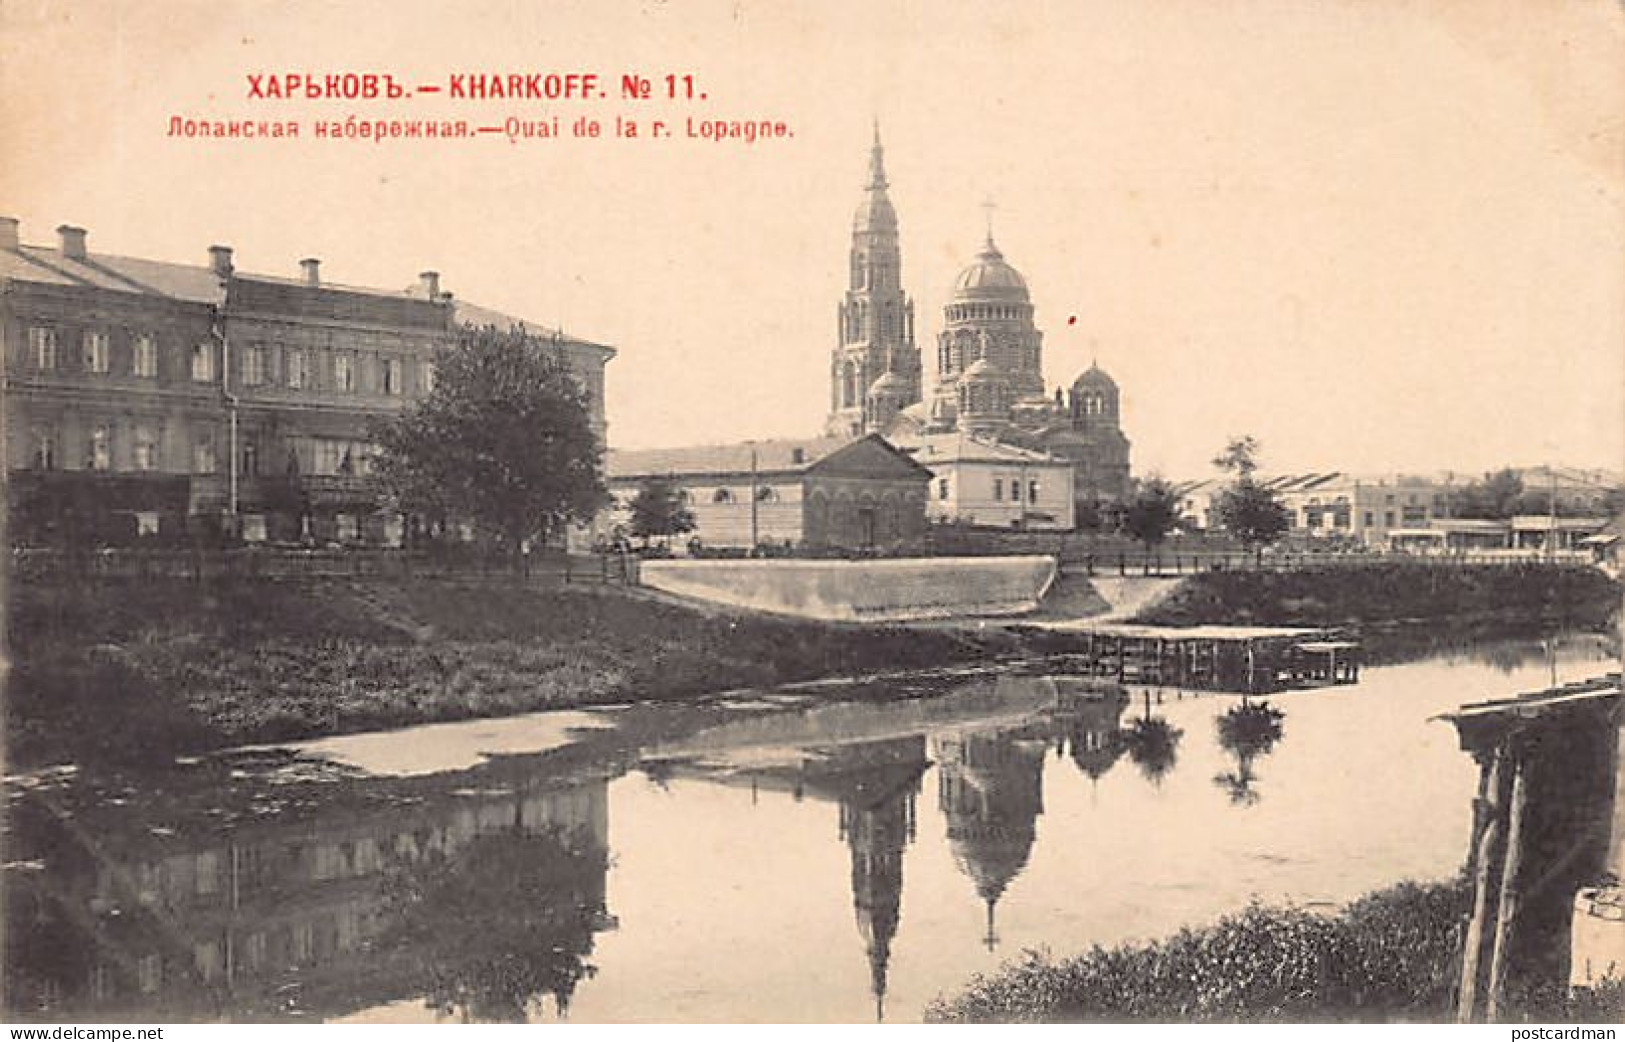 Ukraine - KHARKIV - Quays Of The Lopan River - Publ. Scherer, Nabholz And Co. 11 (Year 1902) - Ukraine